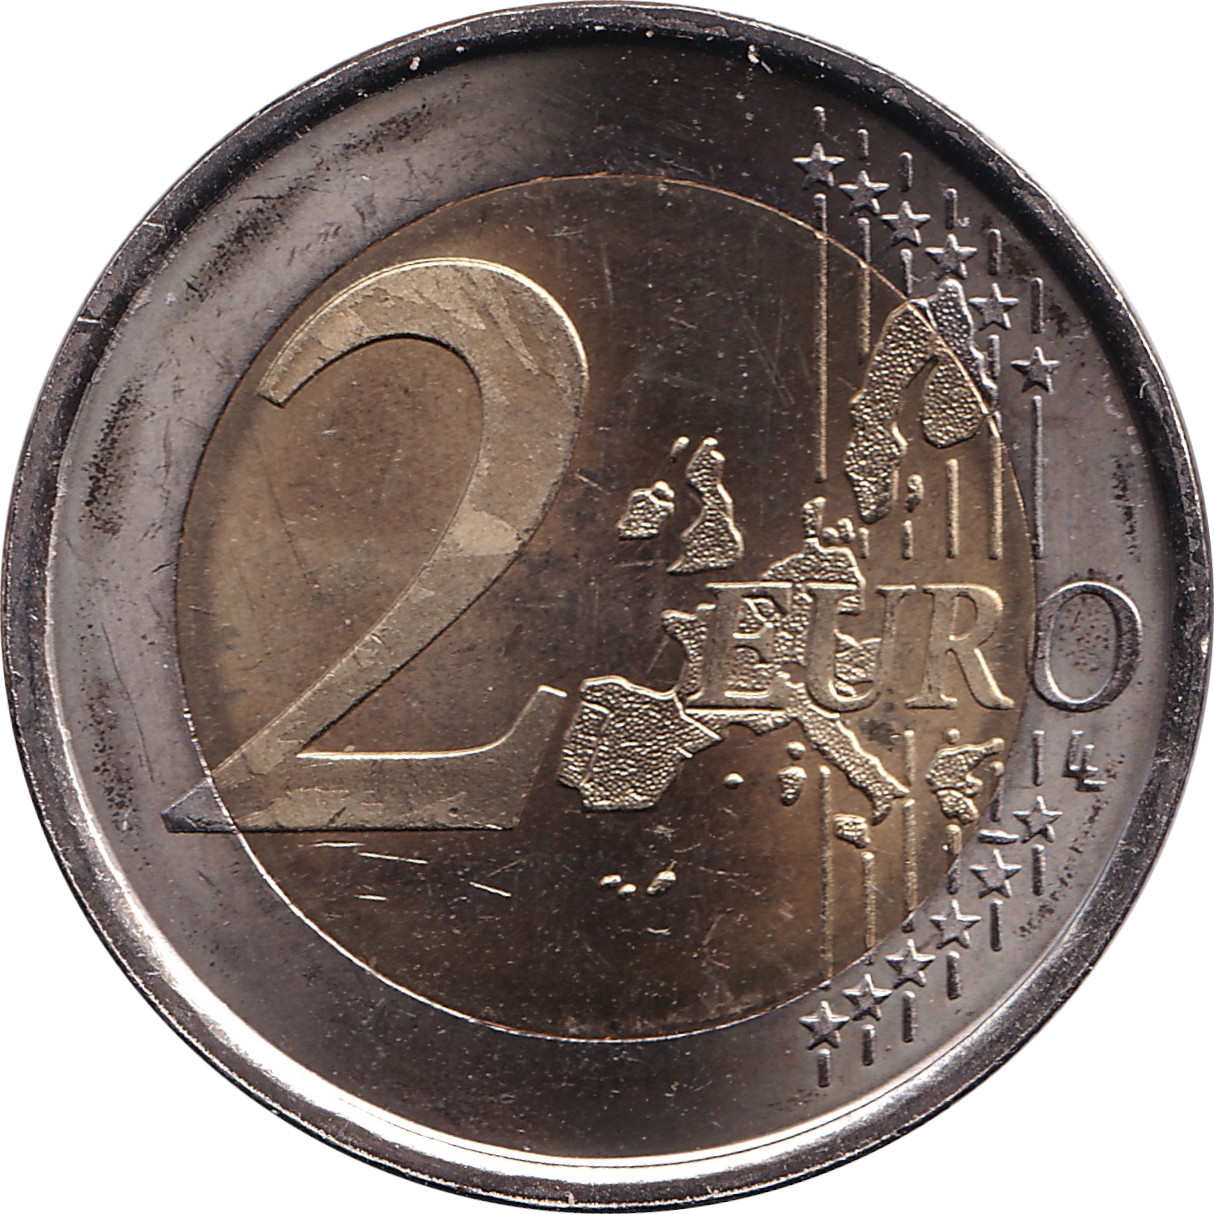 2 euro - Don Quichotte